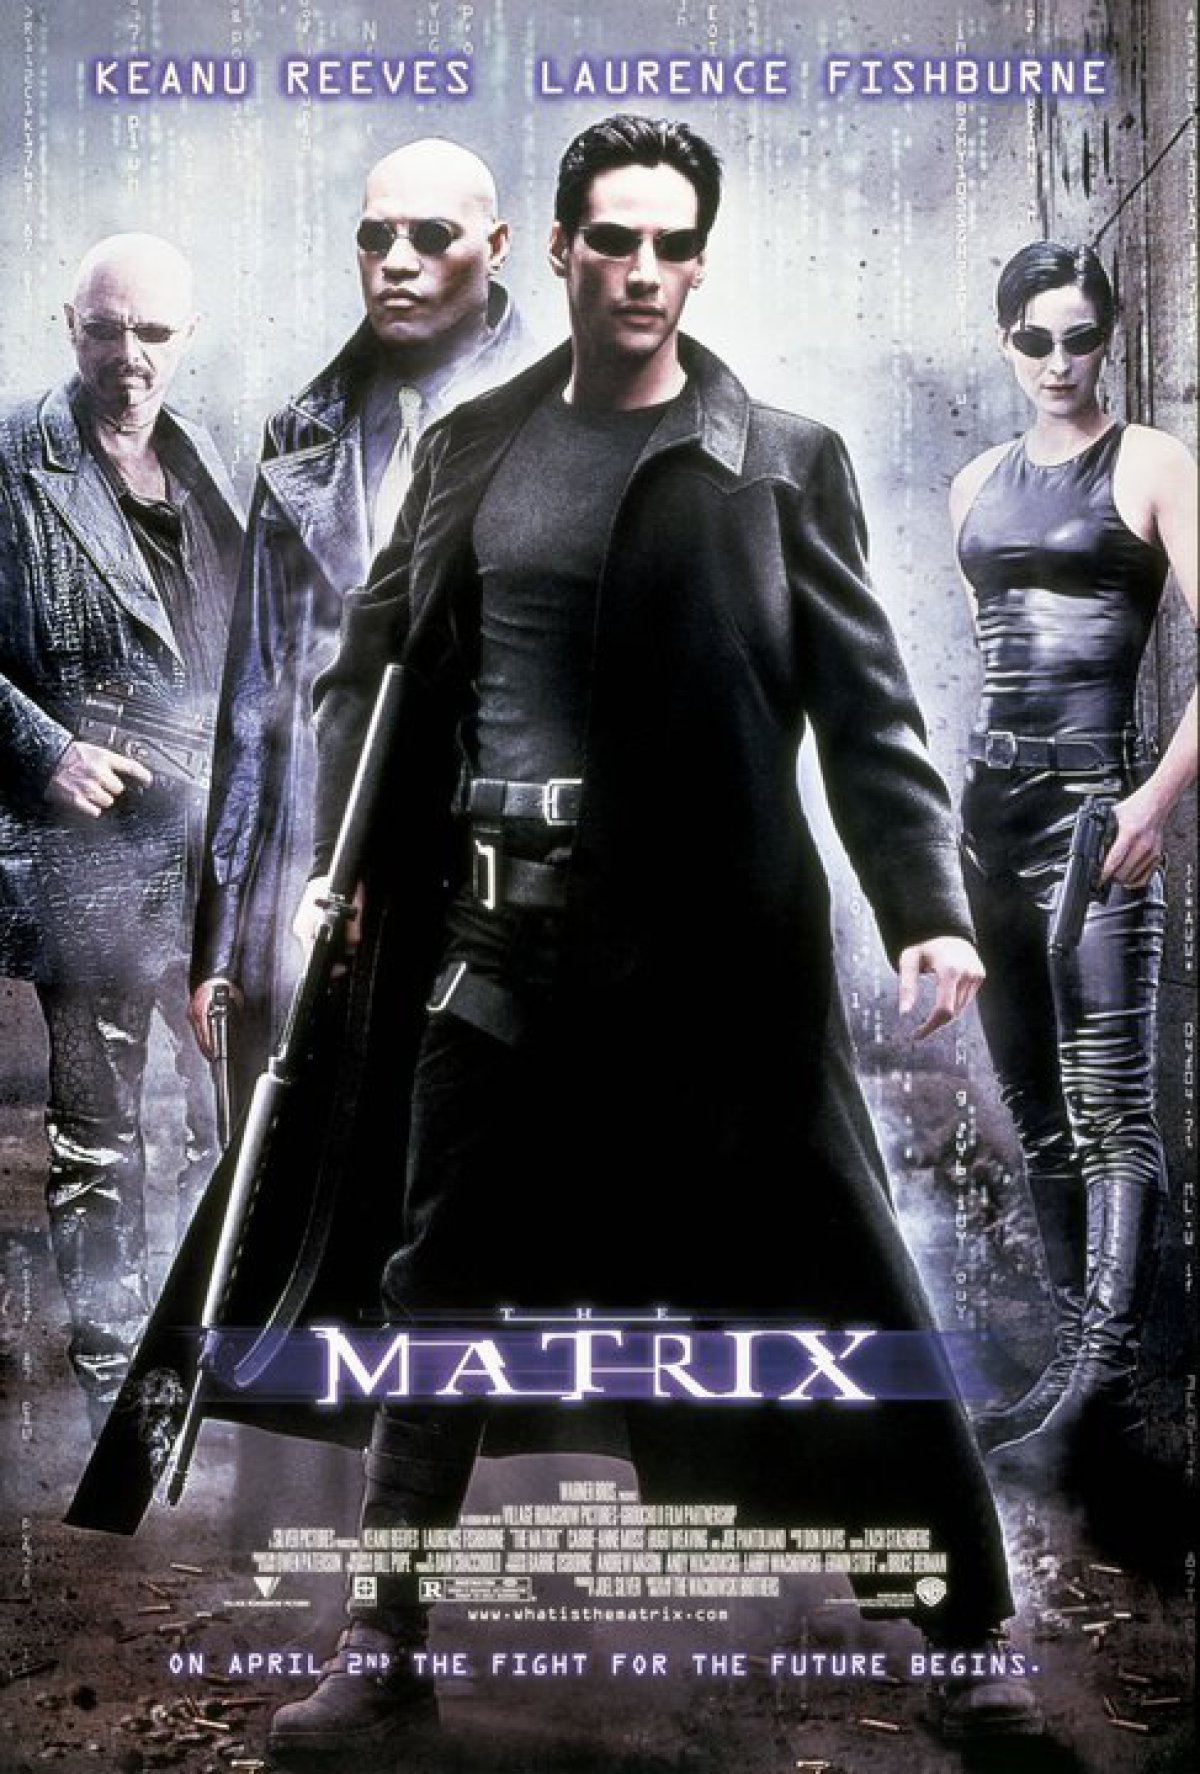 Así se ve Carrie-Anne Moss, actriz qué interpretó a ‘Trinity’ en Matrix